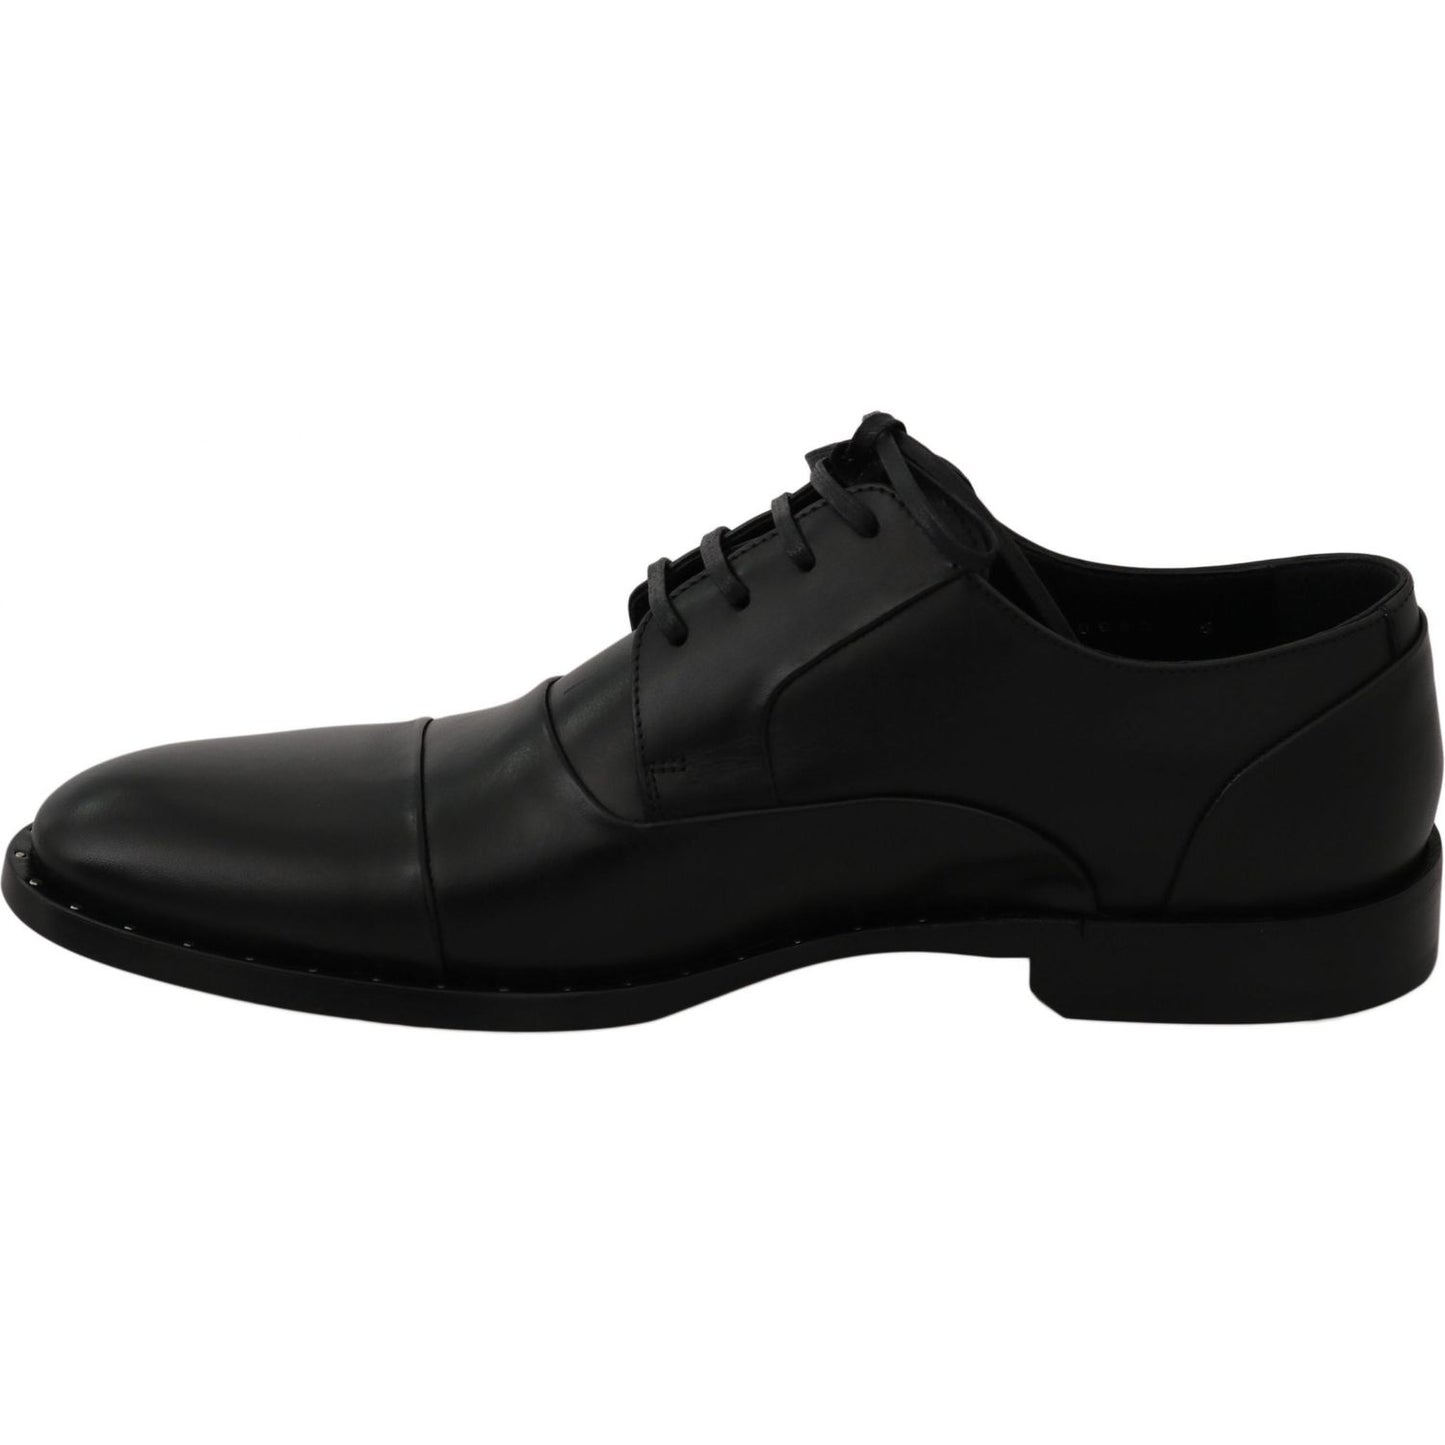 Dolce & Gabbana Sleek Black Leather Formal Dress Shoes Dress Shoes black-leather-derby-formal-shoes